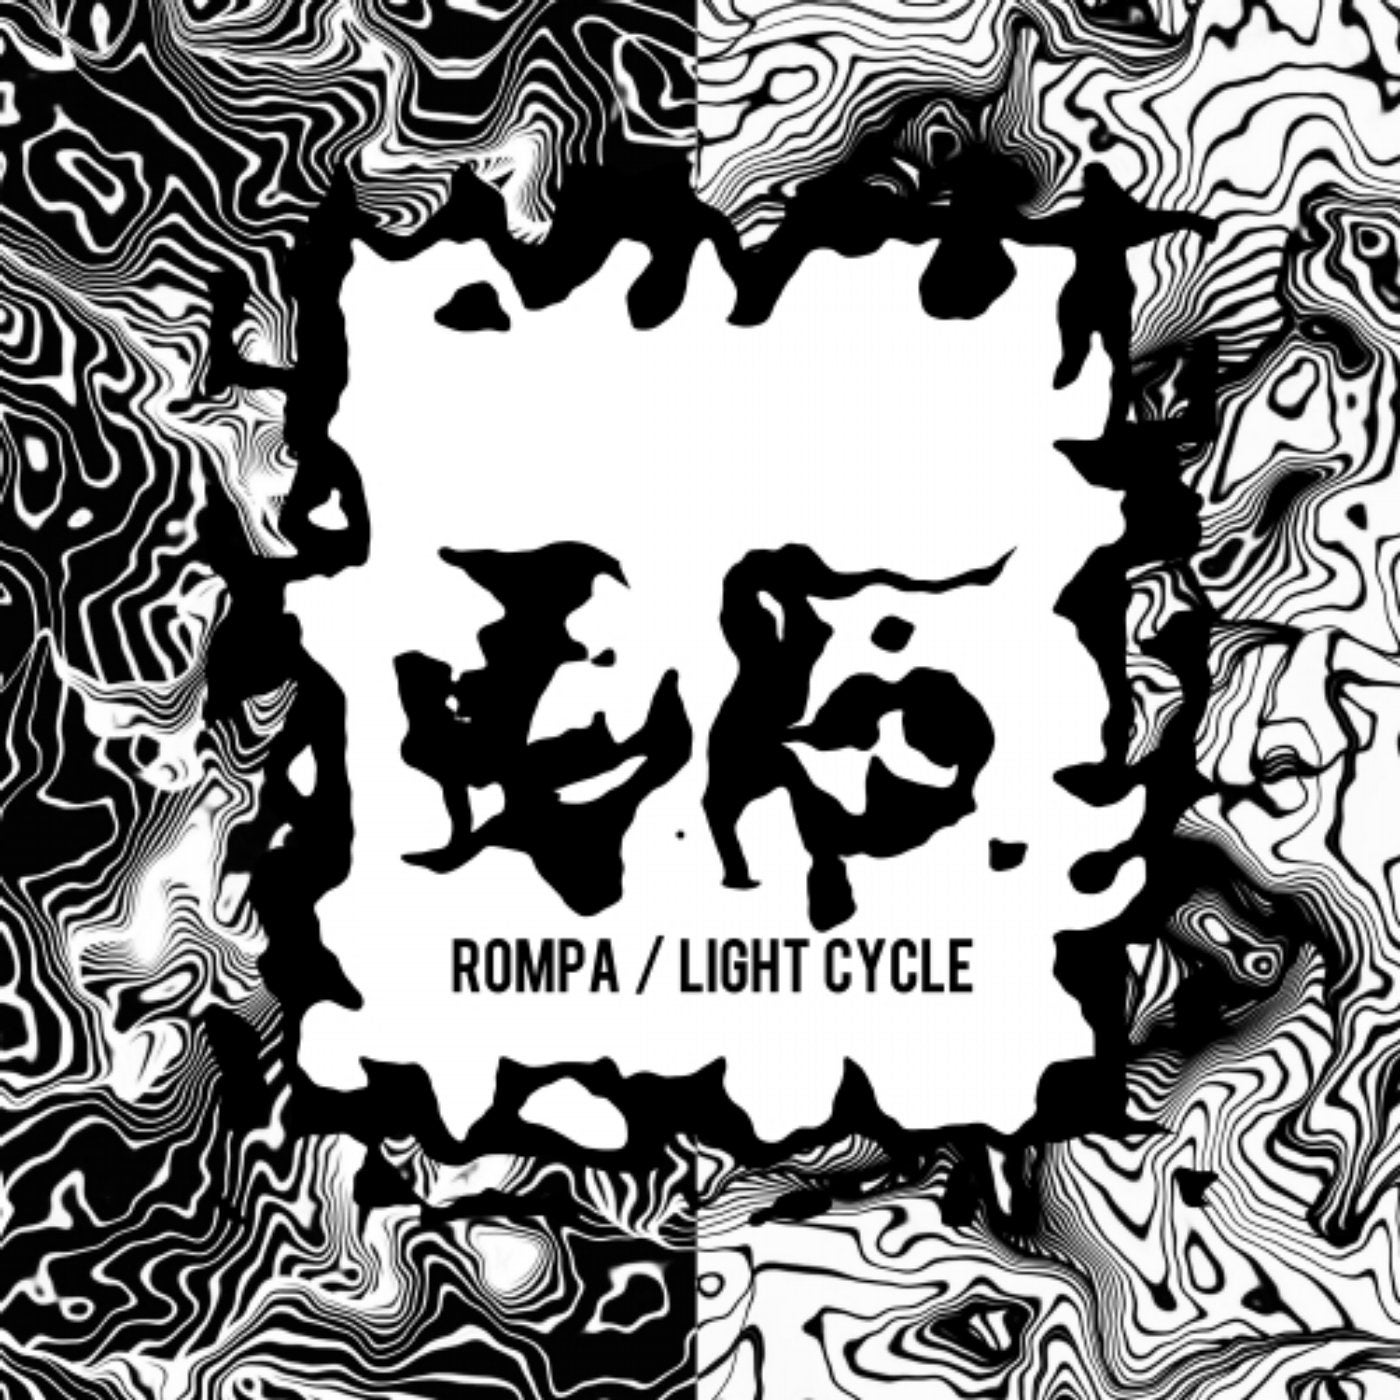 Rompa / Light Cycle